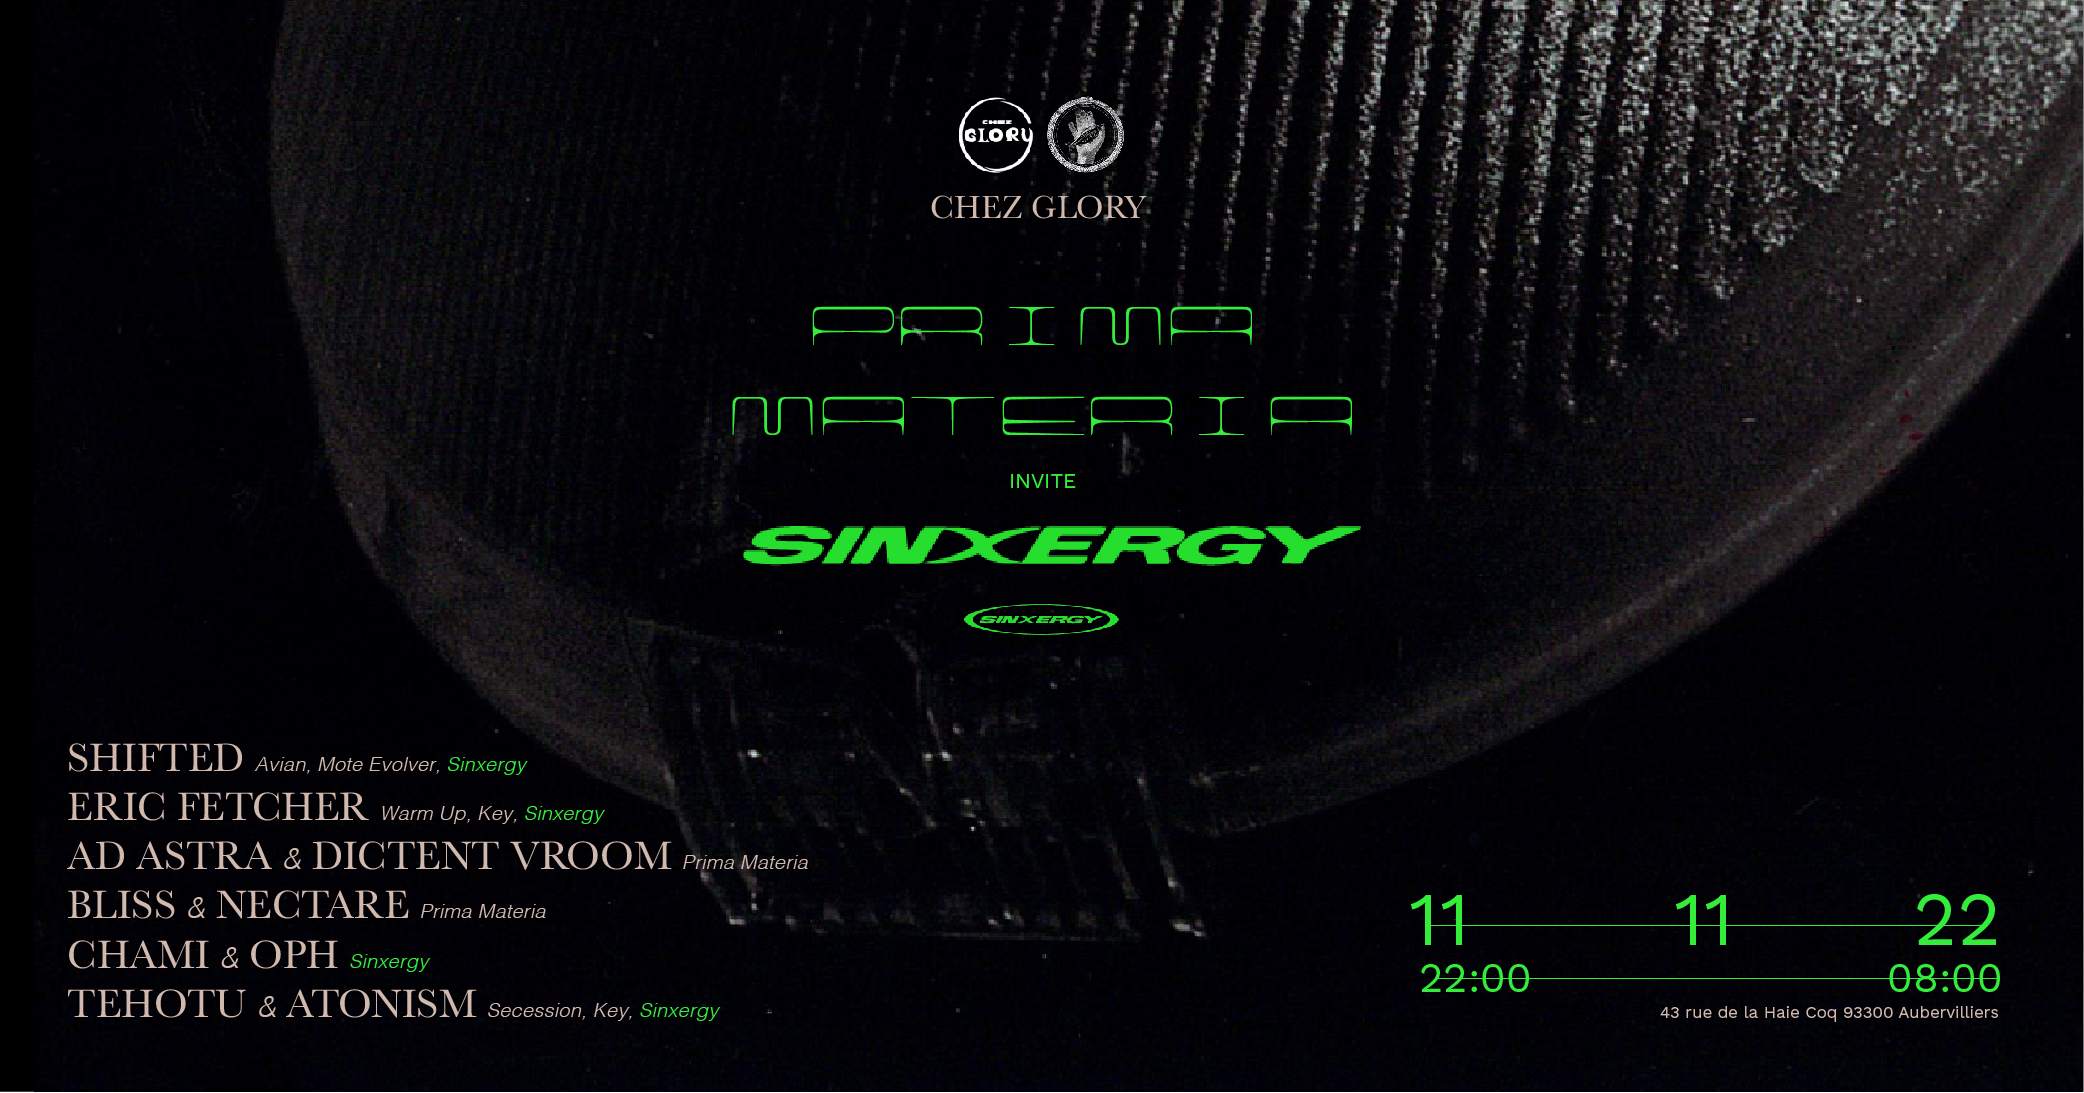 CHEZ GLORY: Prima Materia invite Sinxergy - フライヤー表